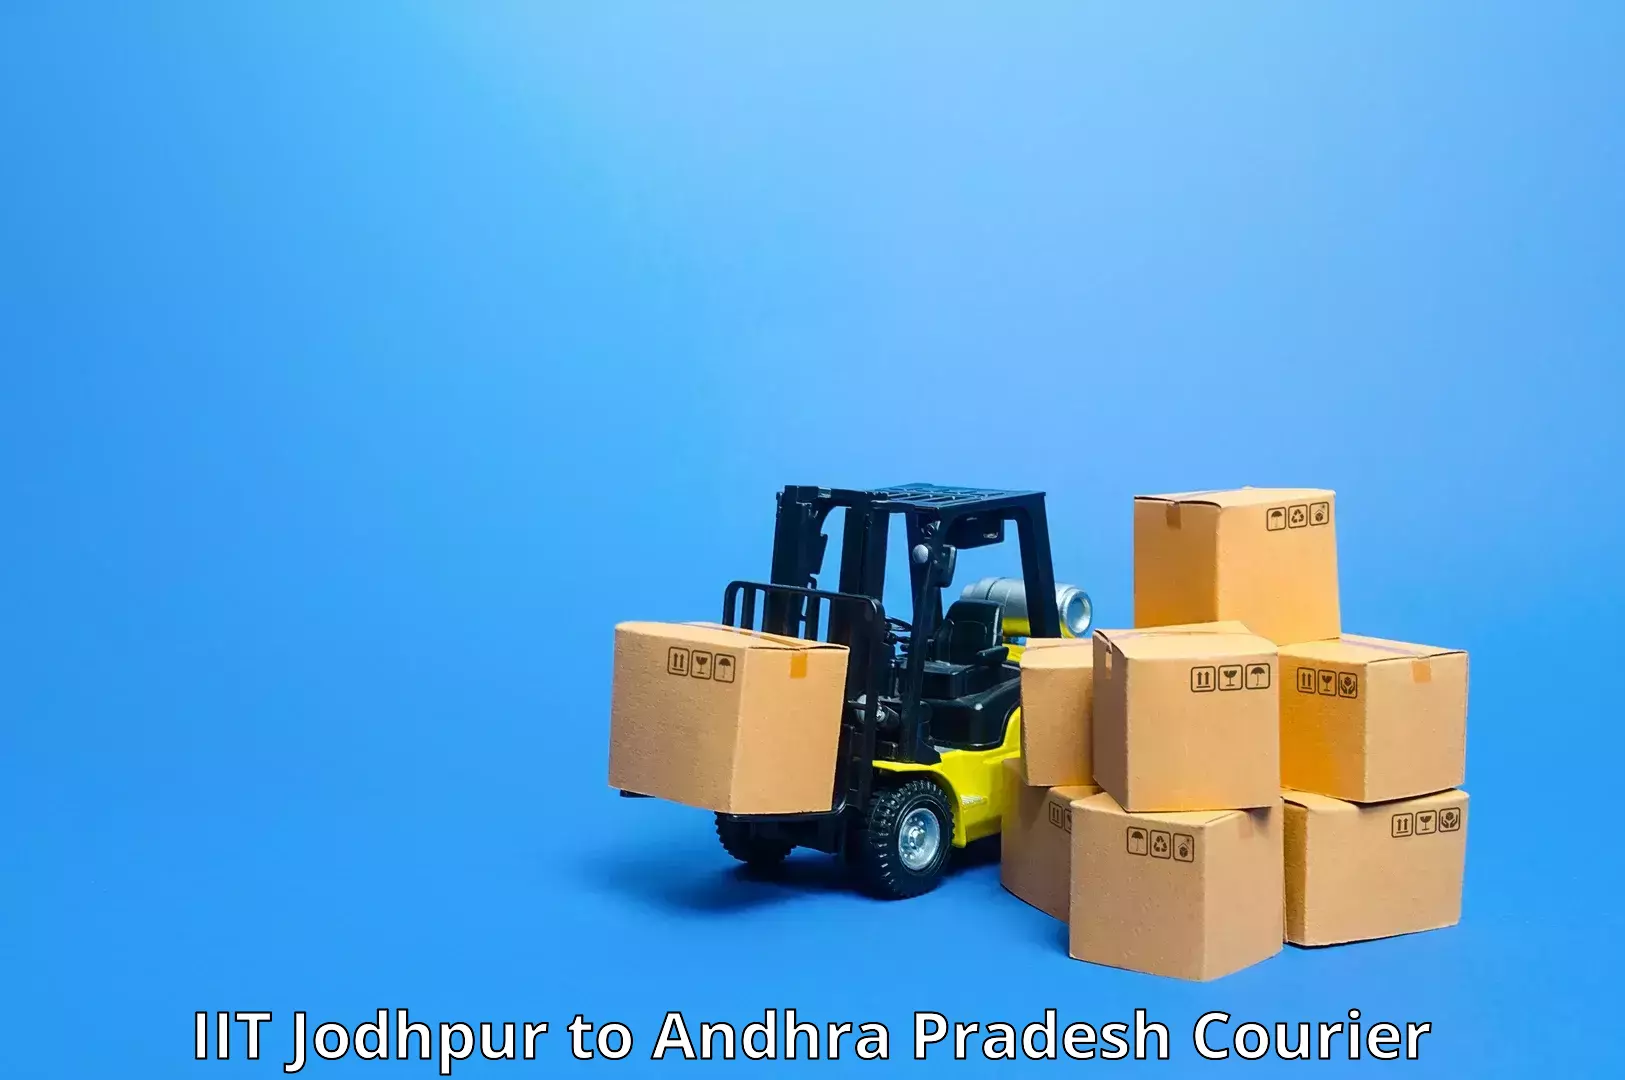 Express package handling IIT Jodhpur to Vuyyuru